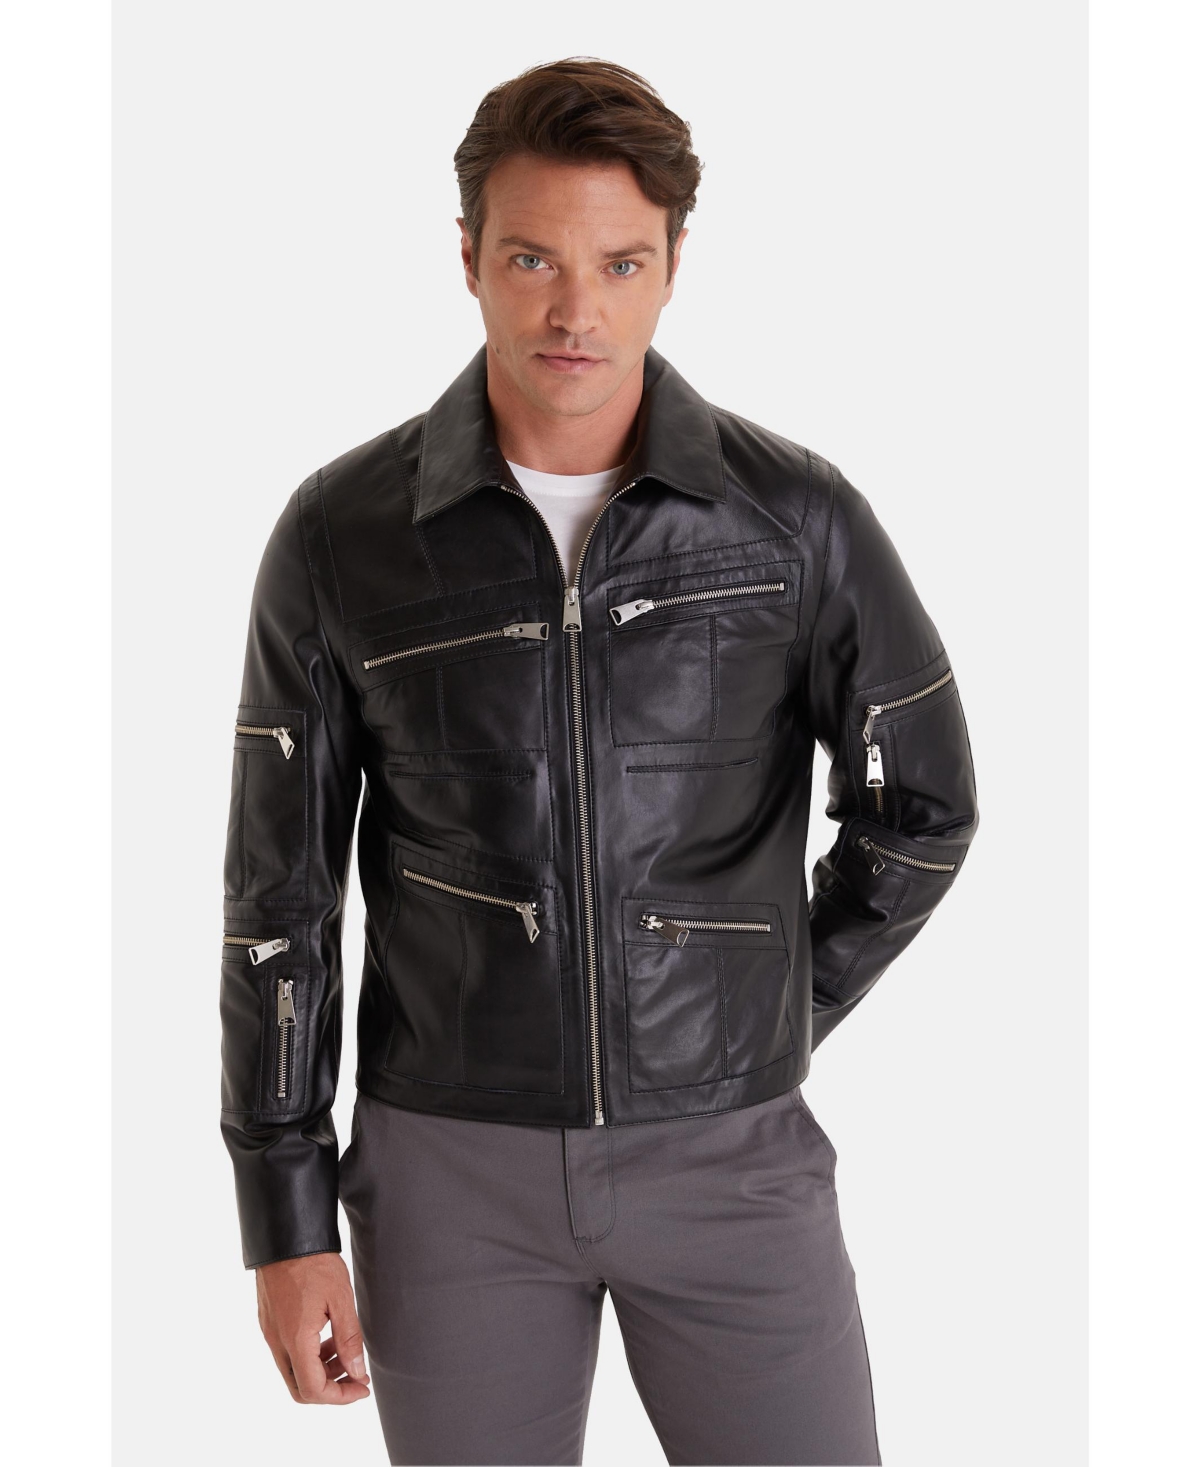 Men's Leather Fashion Jacket, Black - Black